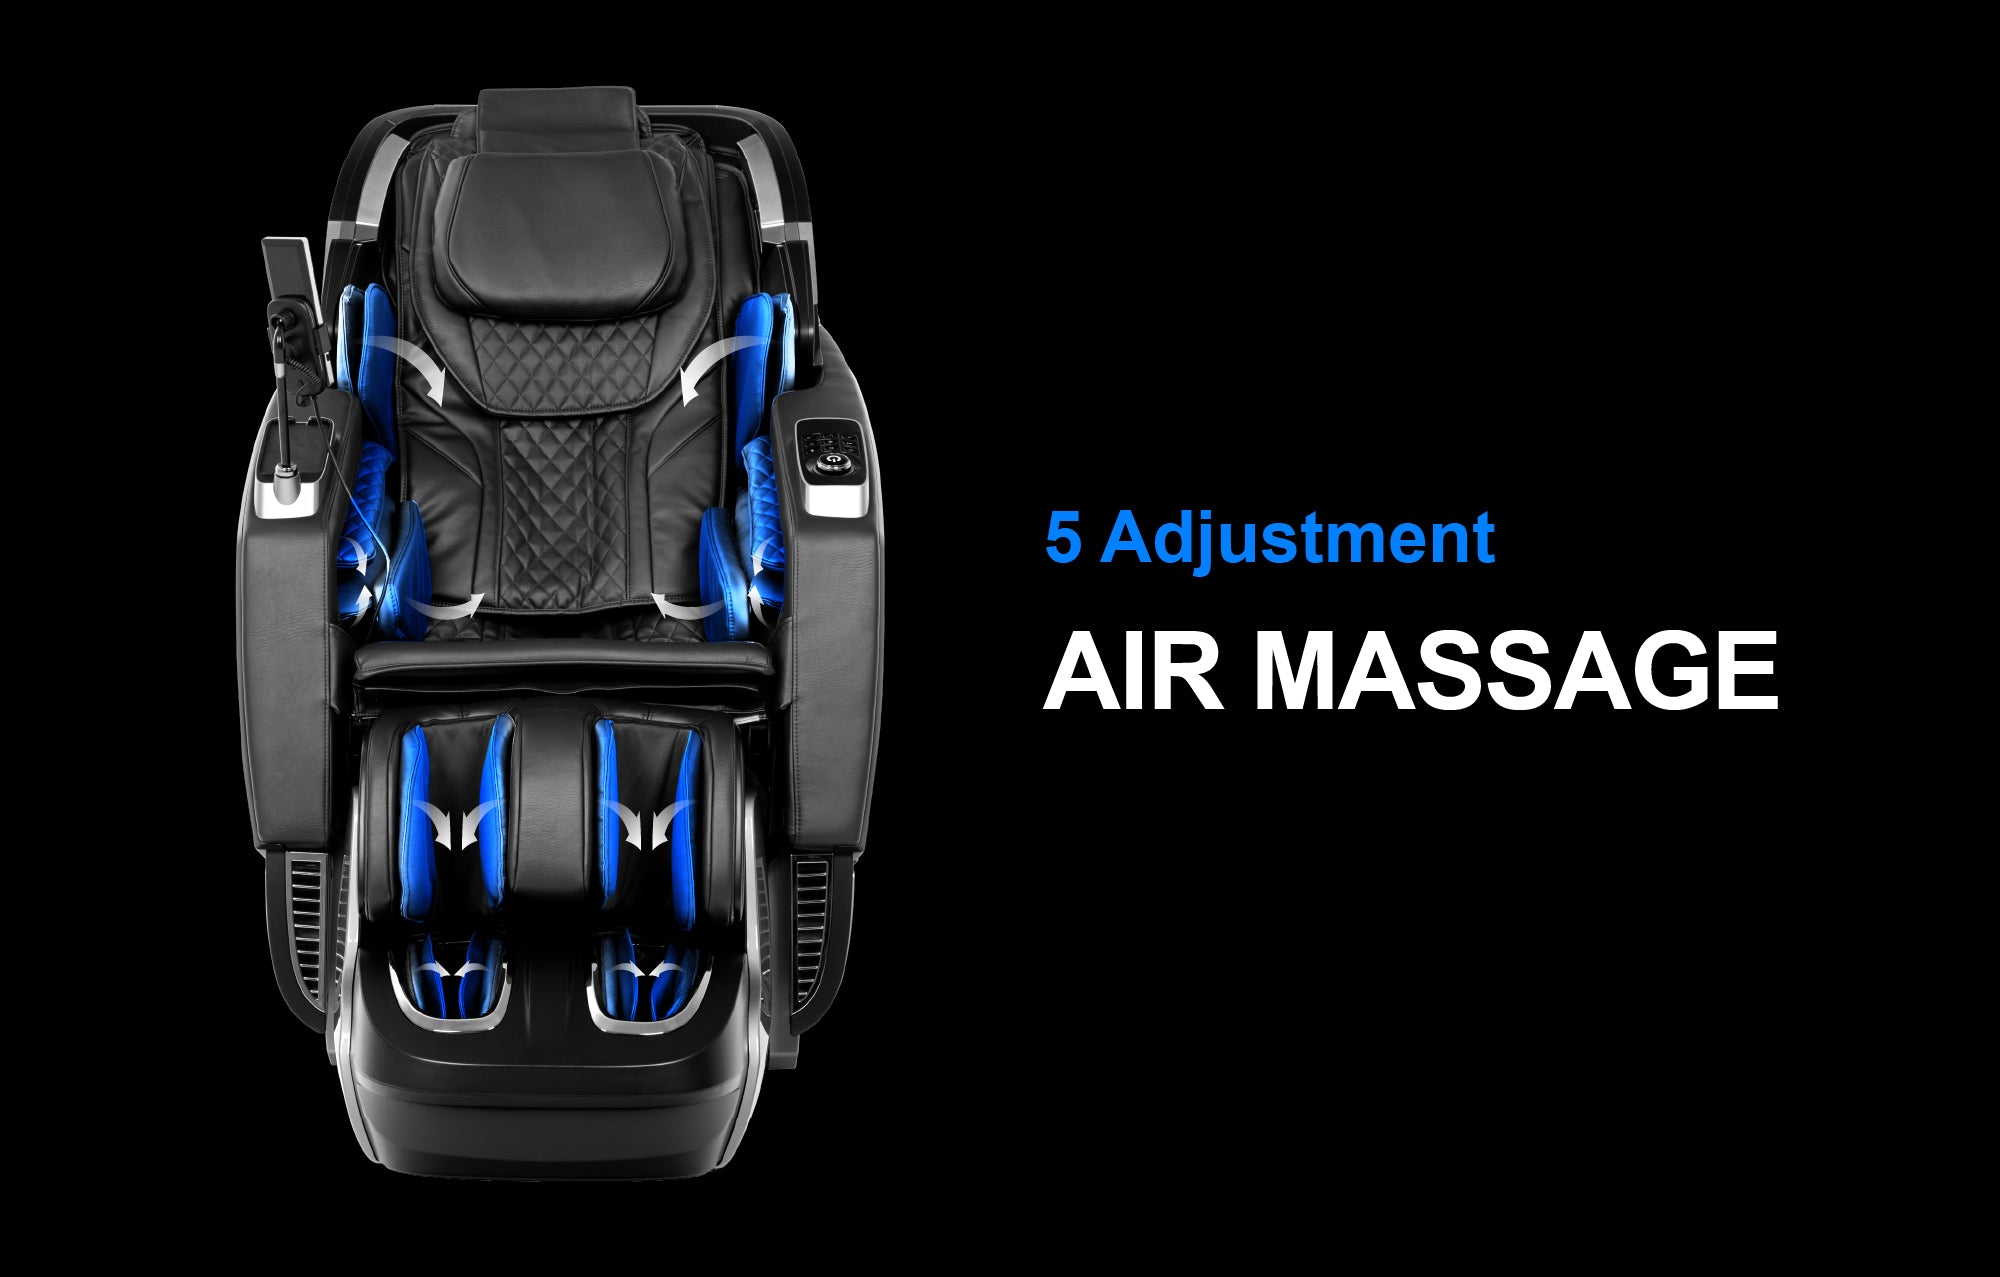 5 Adjustment Air Massage